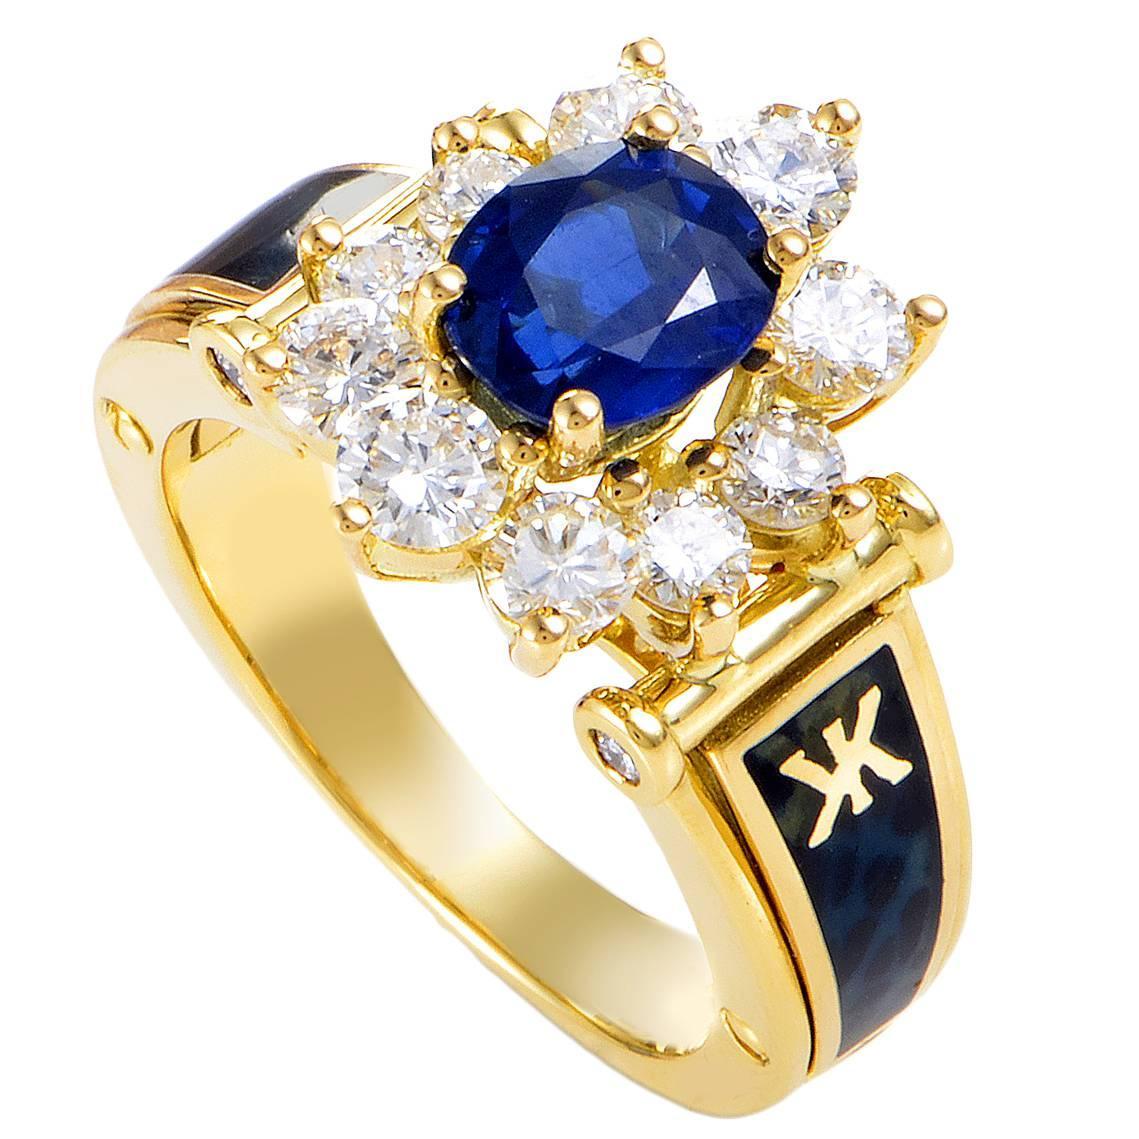 Korloff Enamel Sapphire Diamond Gold Ring For Sale at 1stdibs